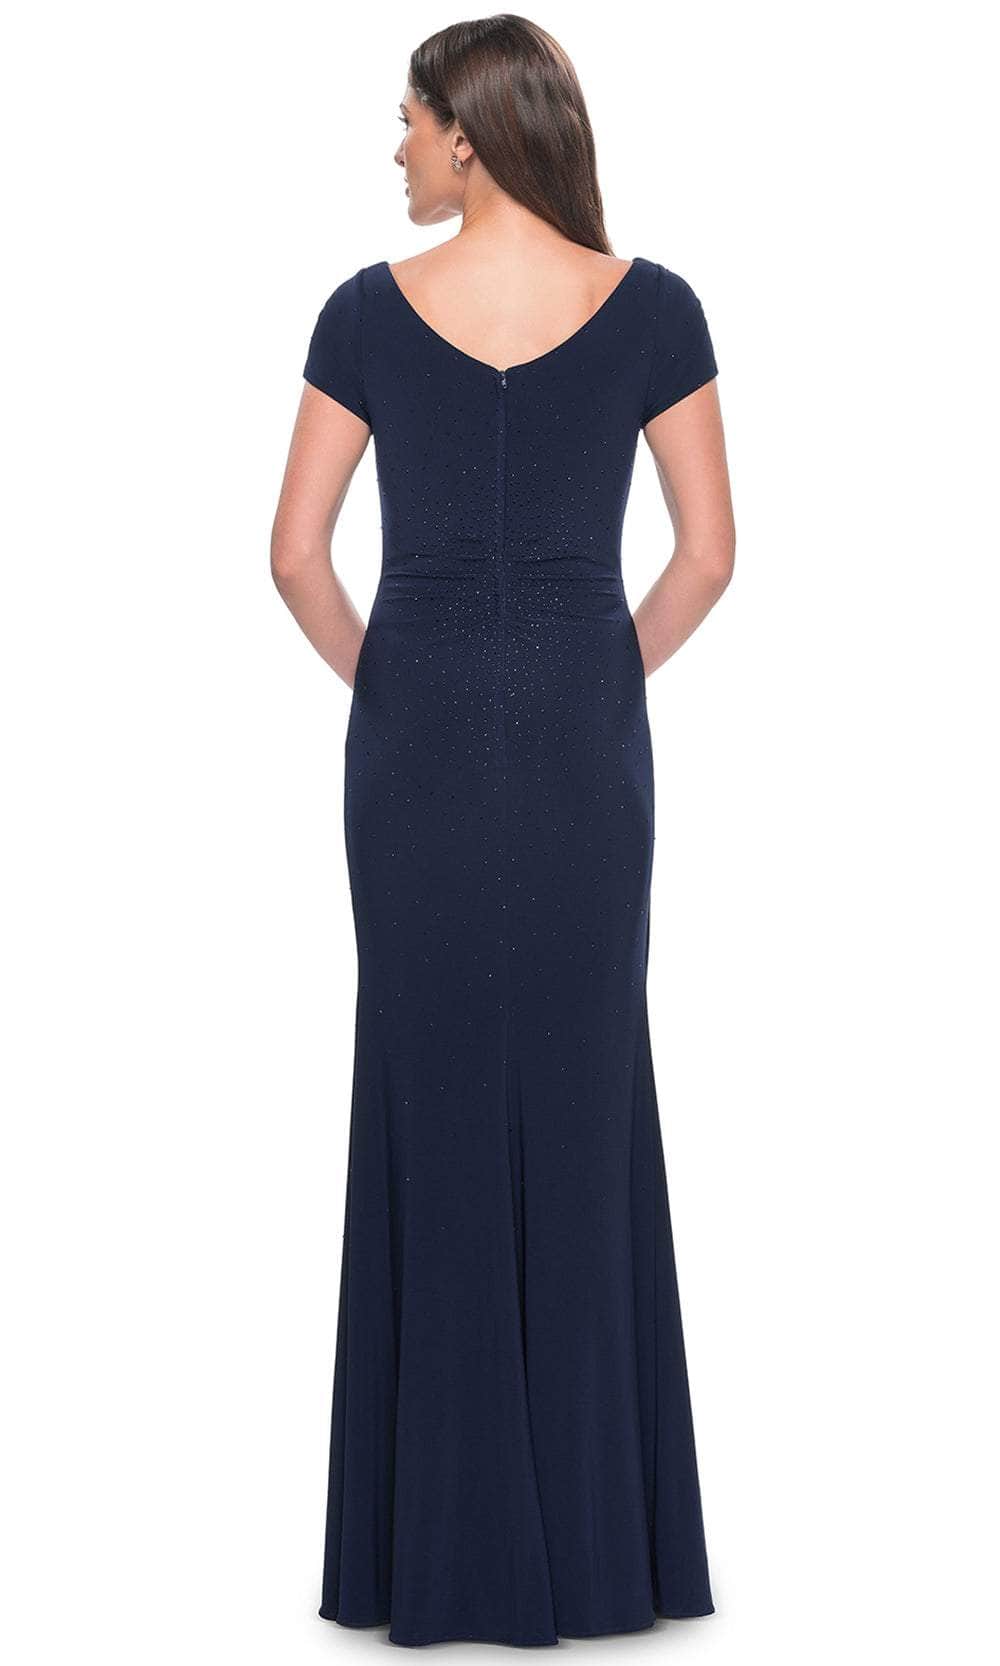 La Femme 31773 - Rhinestone Sheath Formal Dress Evening Dresses